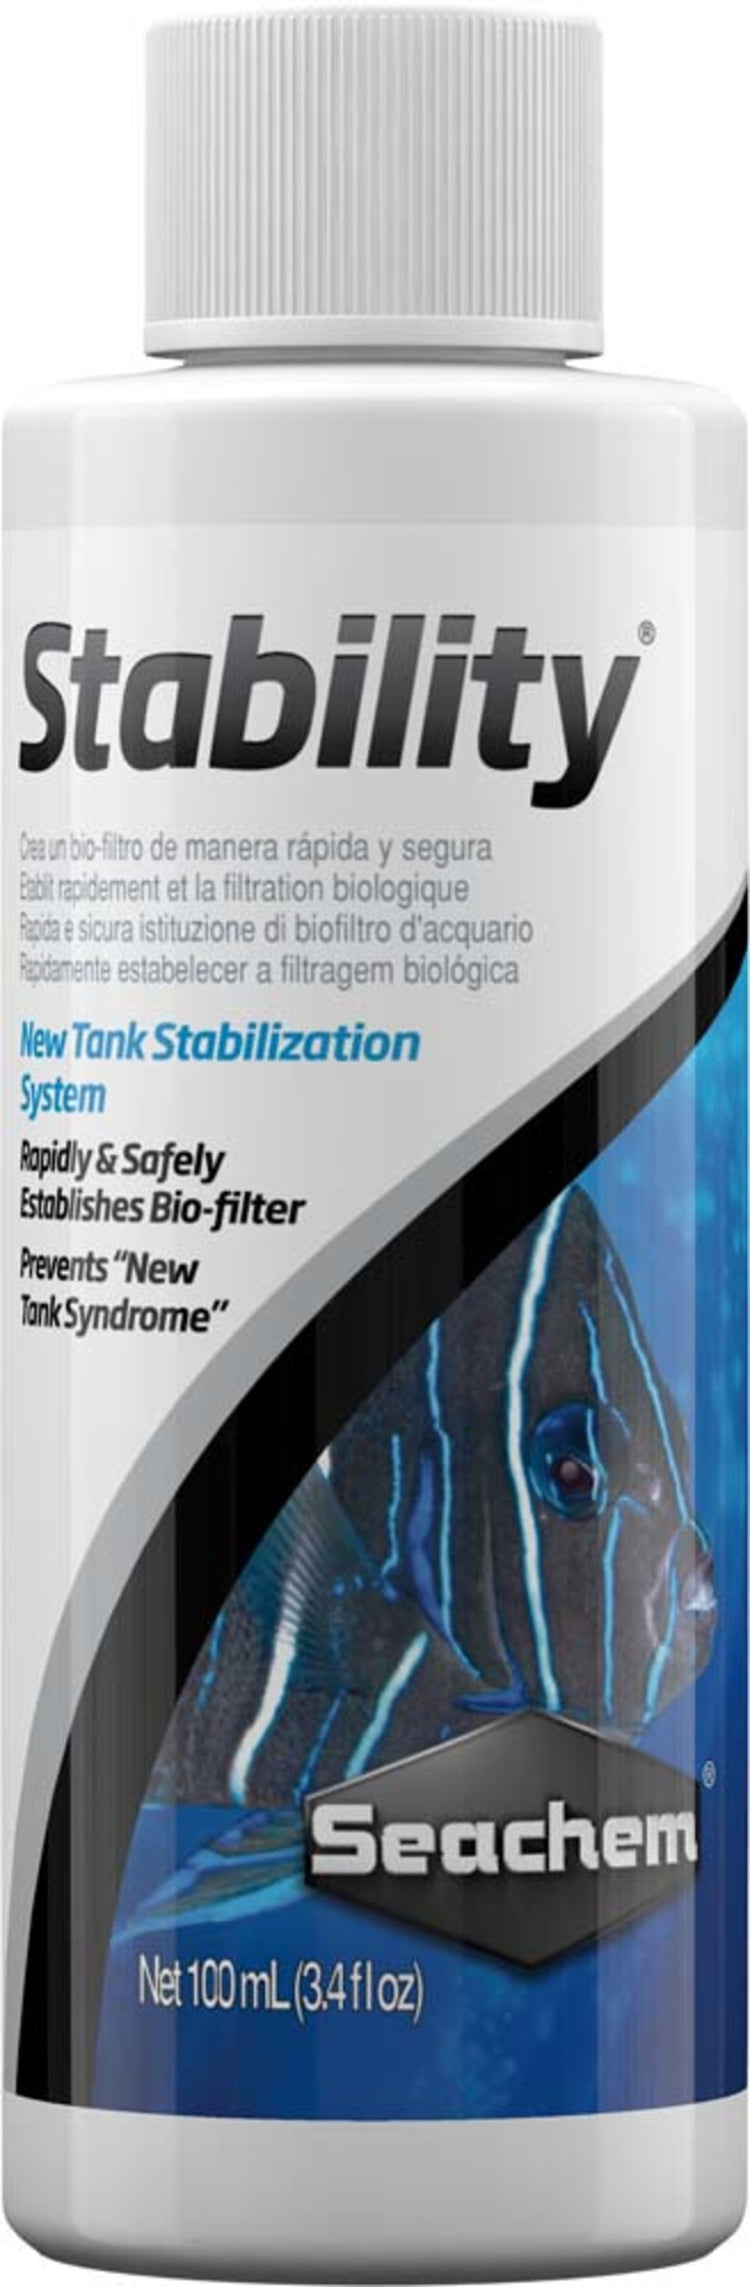 Seachem Stability Biological Water Conditioner 3.4oz